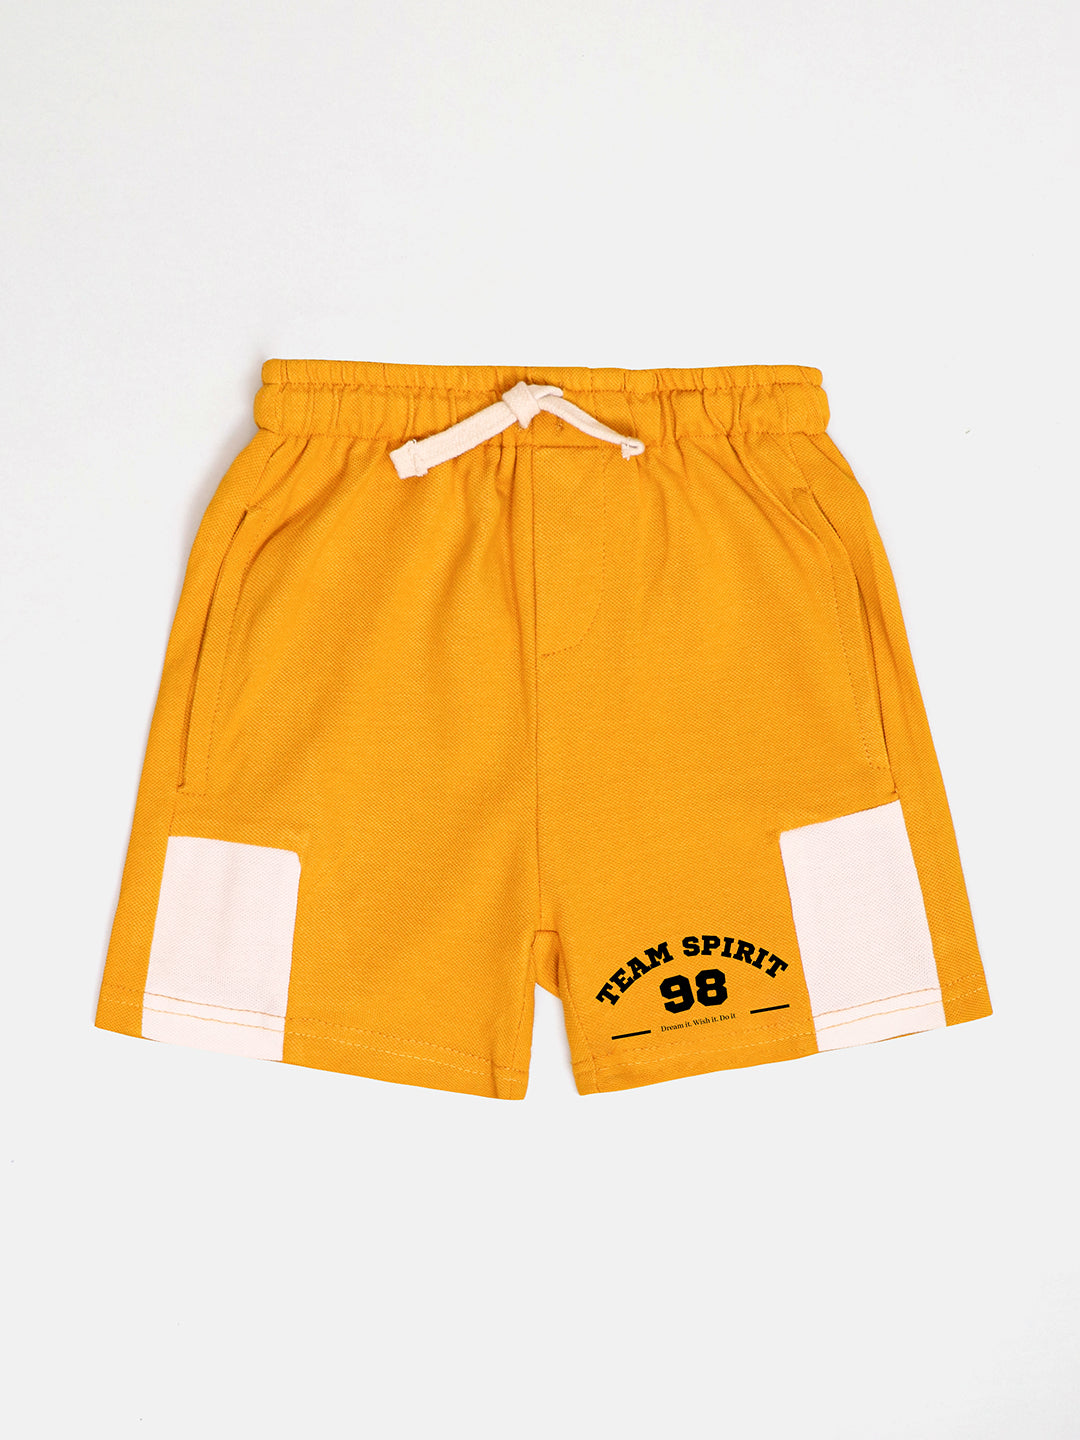 Boys Cotton Shorts Combo- White, Yellow, Maroon